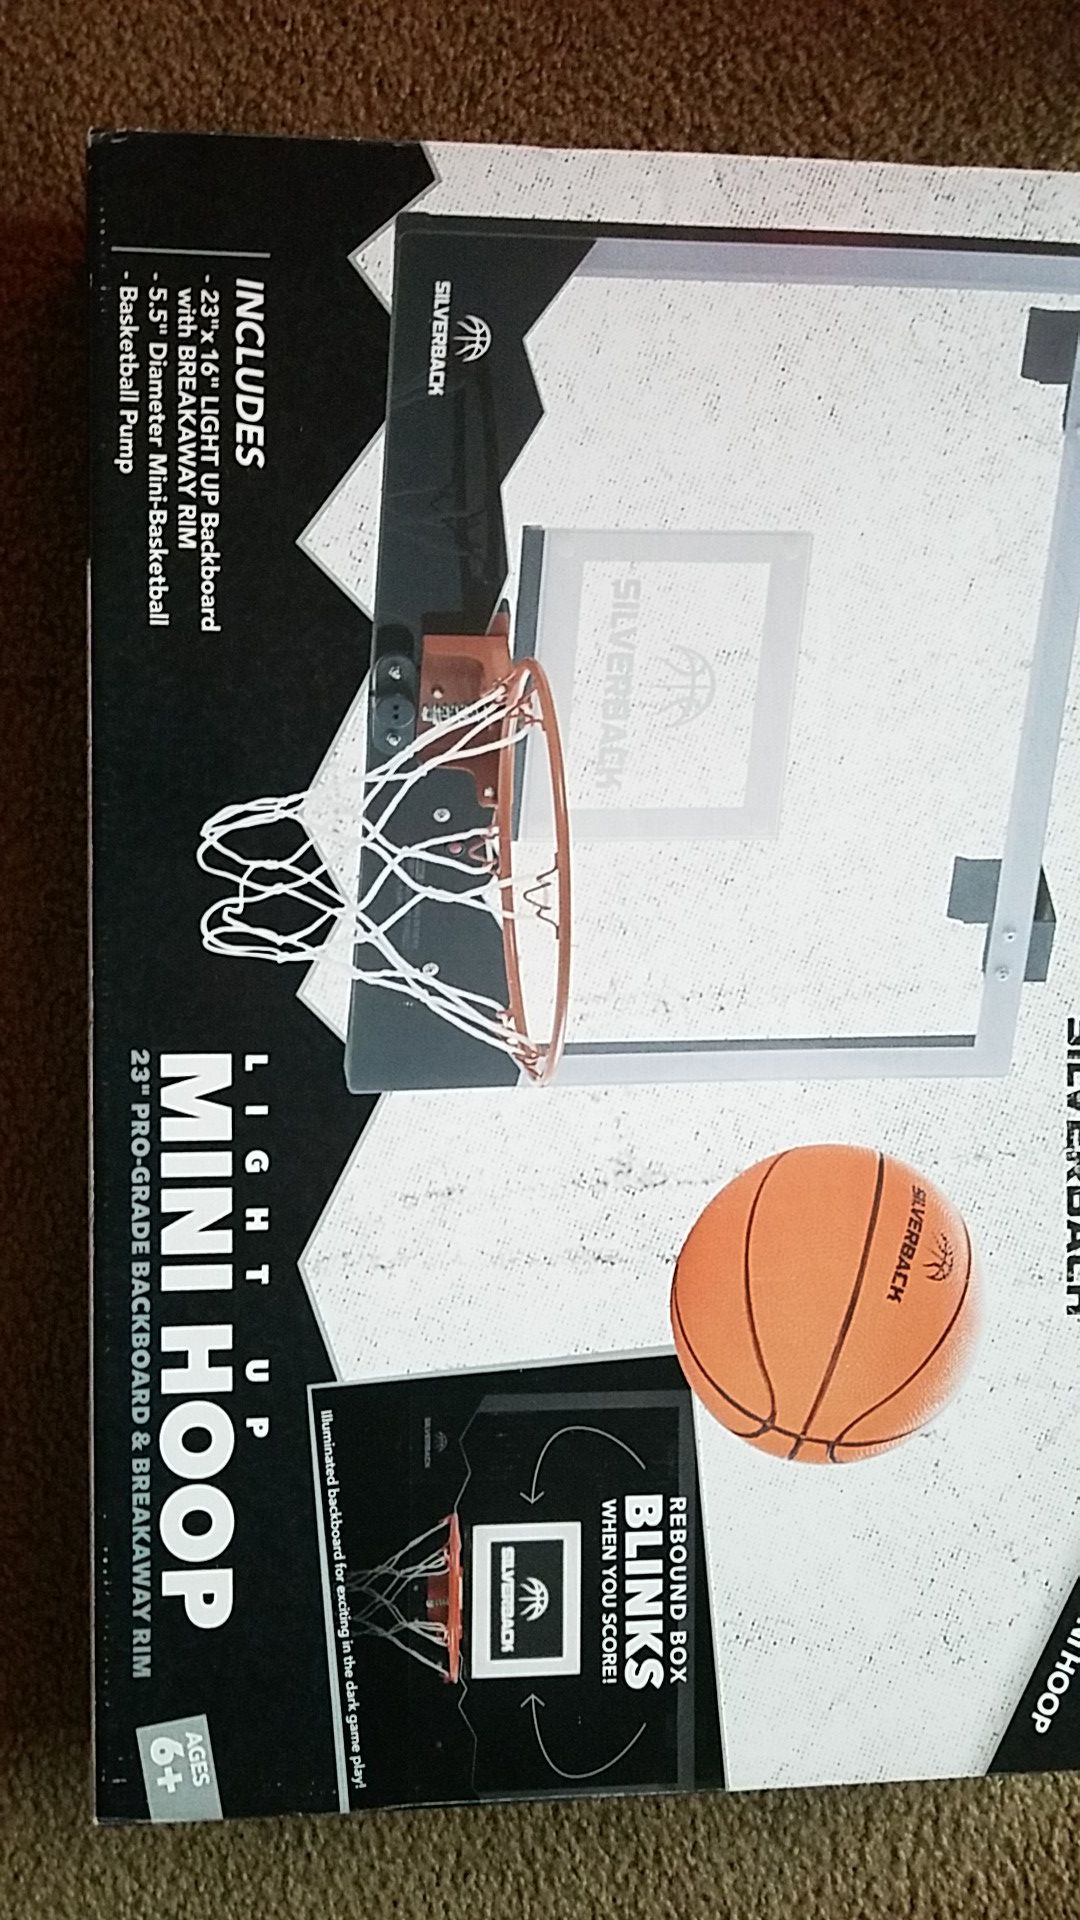 Indoor Mini Basketball Hoop - Brand new